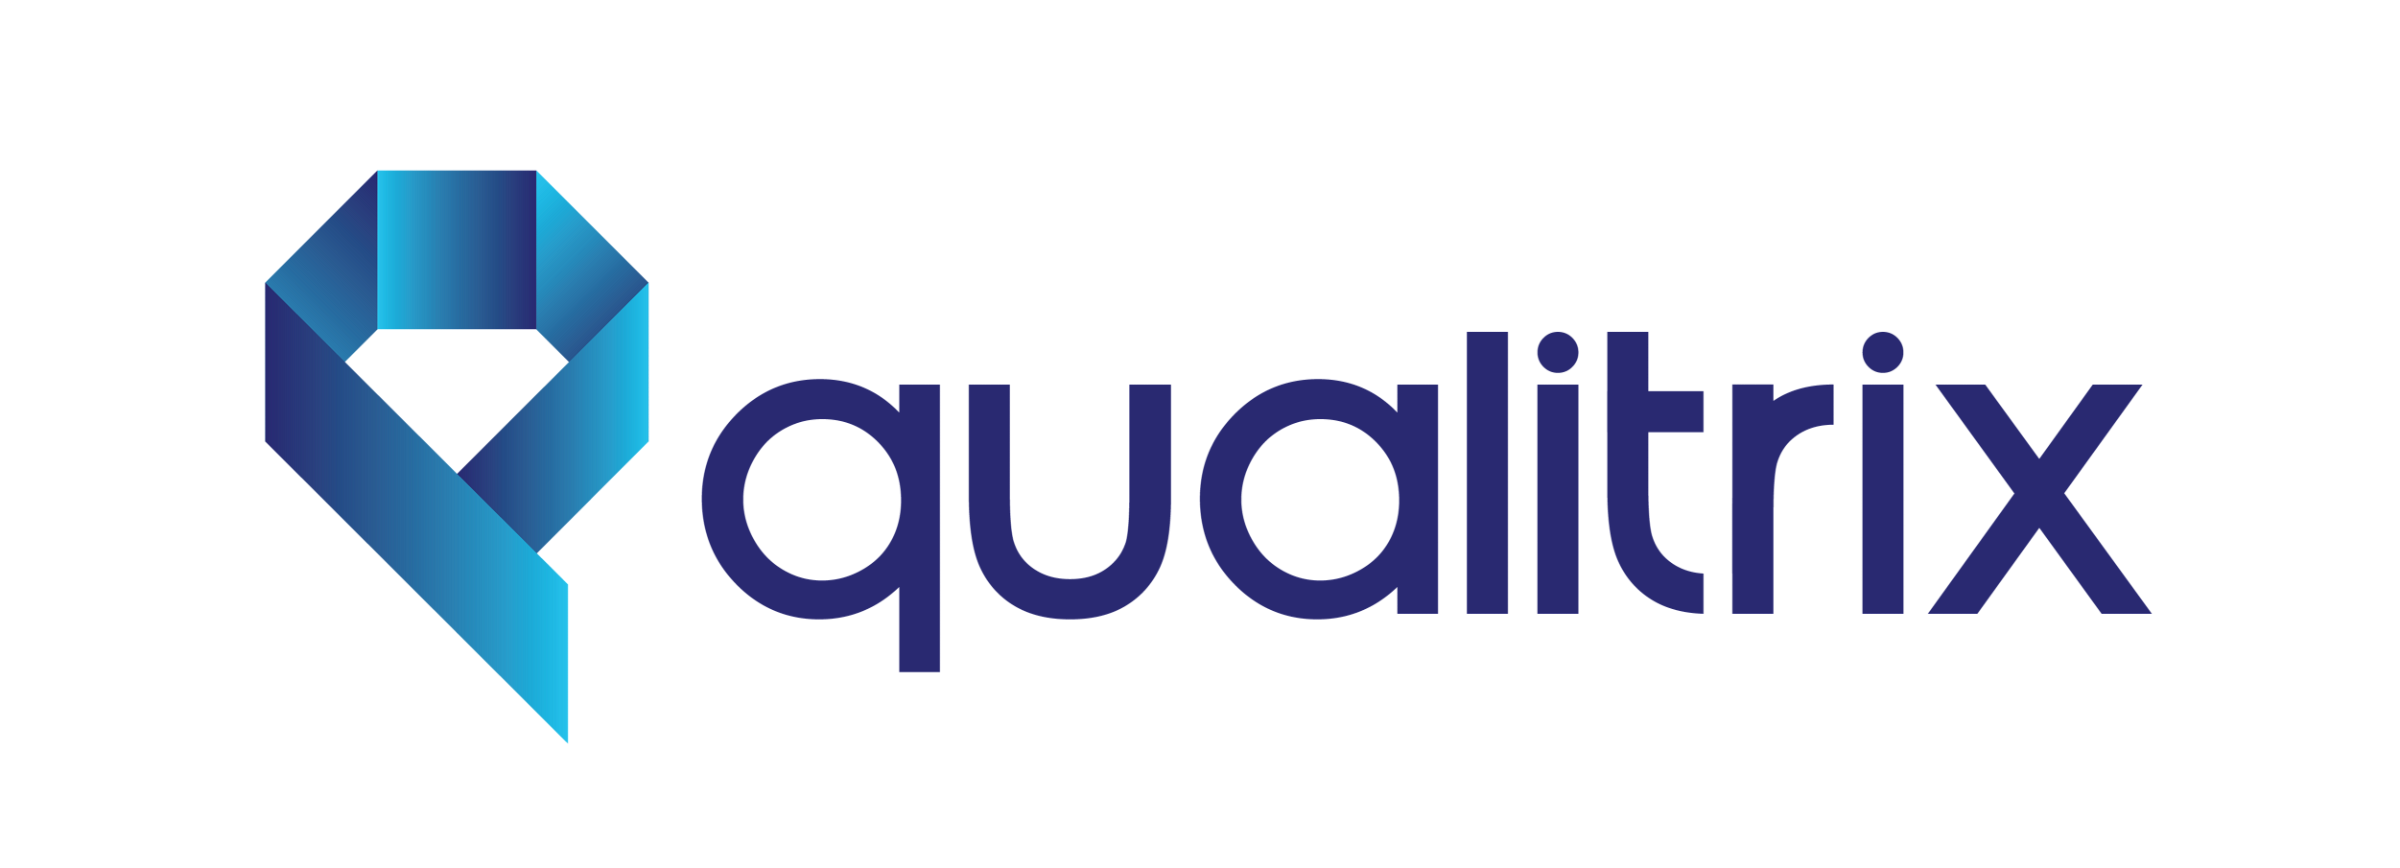 Case study - Qualitrix - Logo